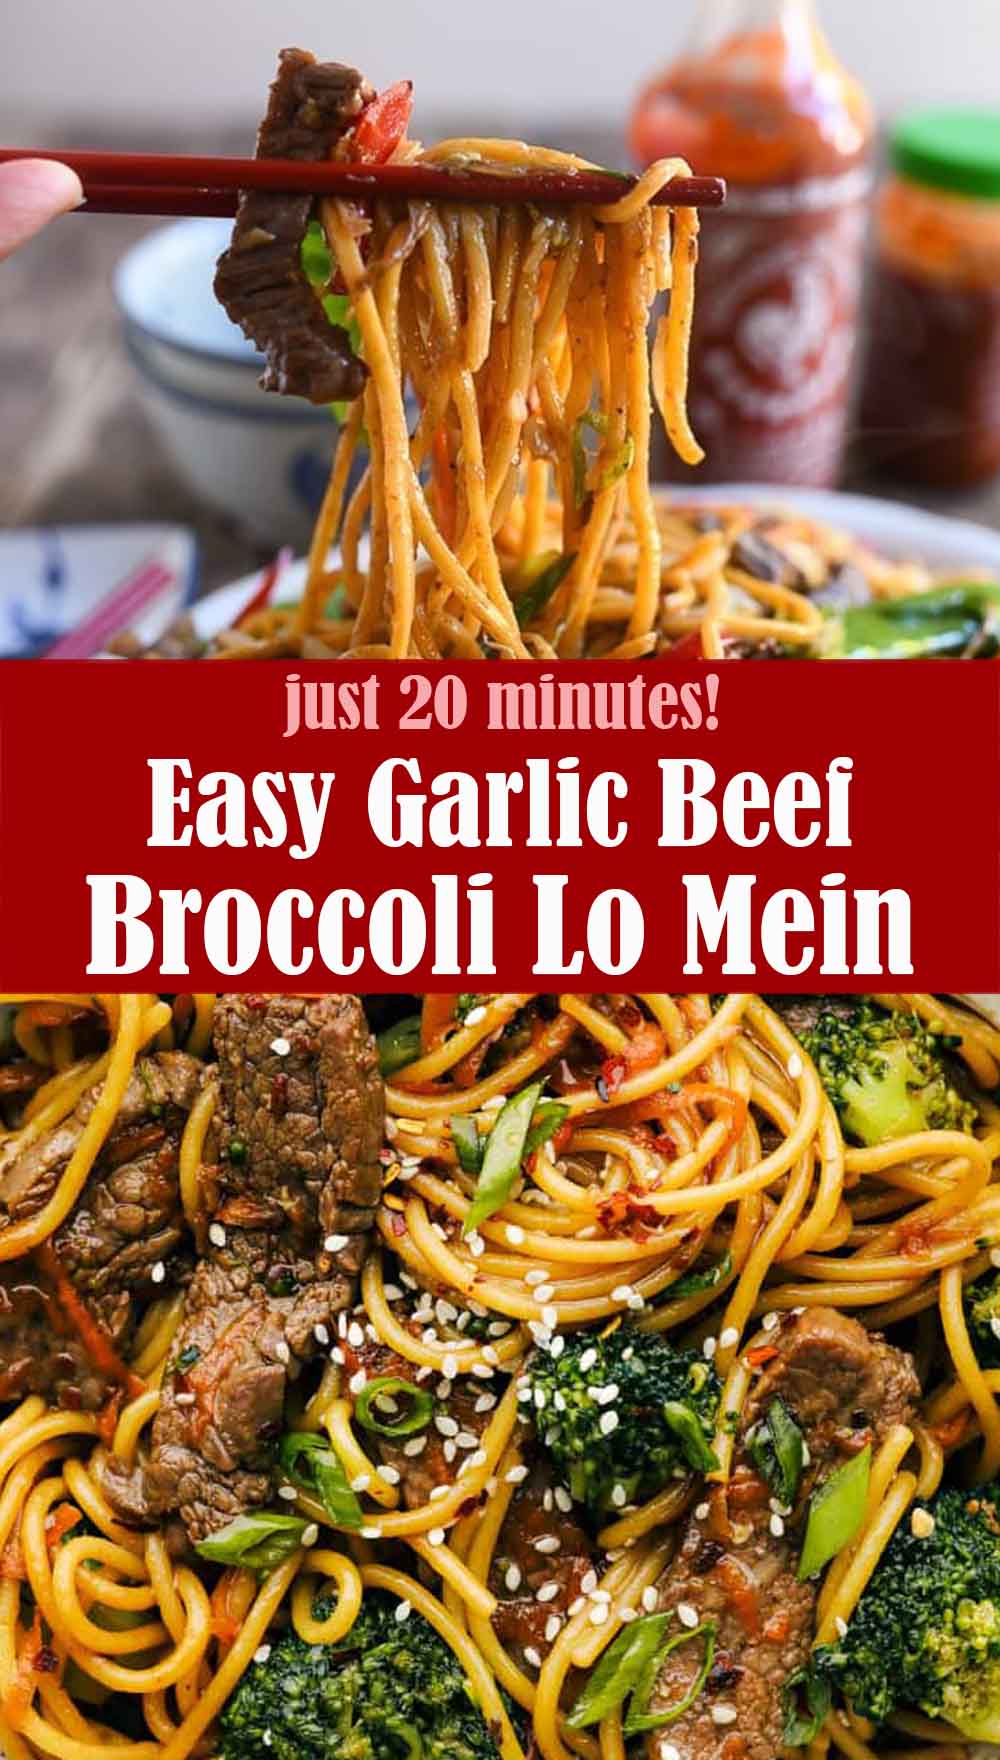 Easy Garlic Beef and Broccoli Lo Mein